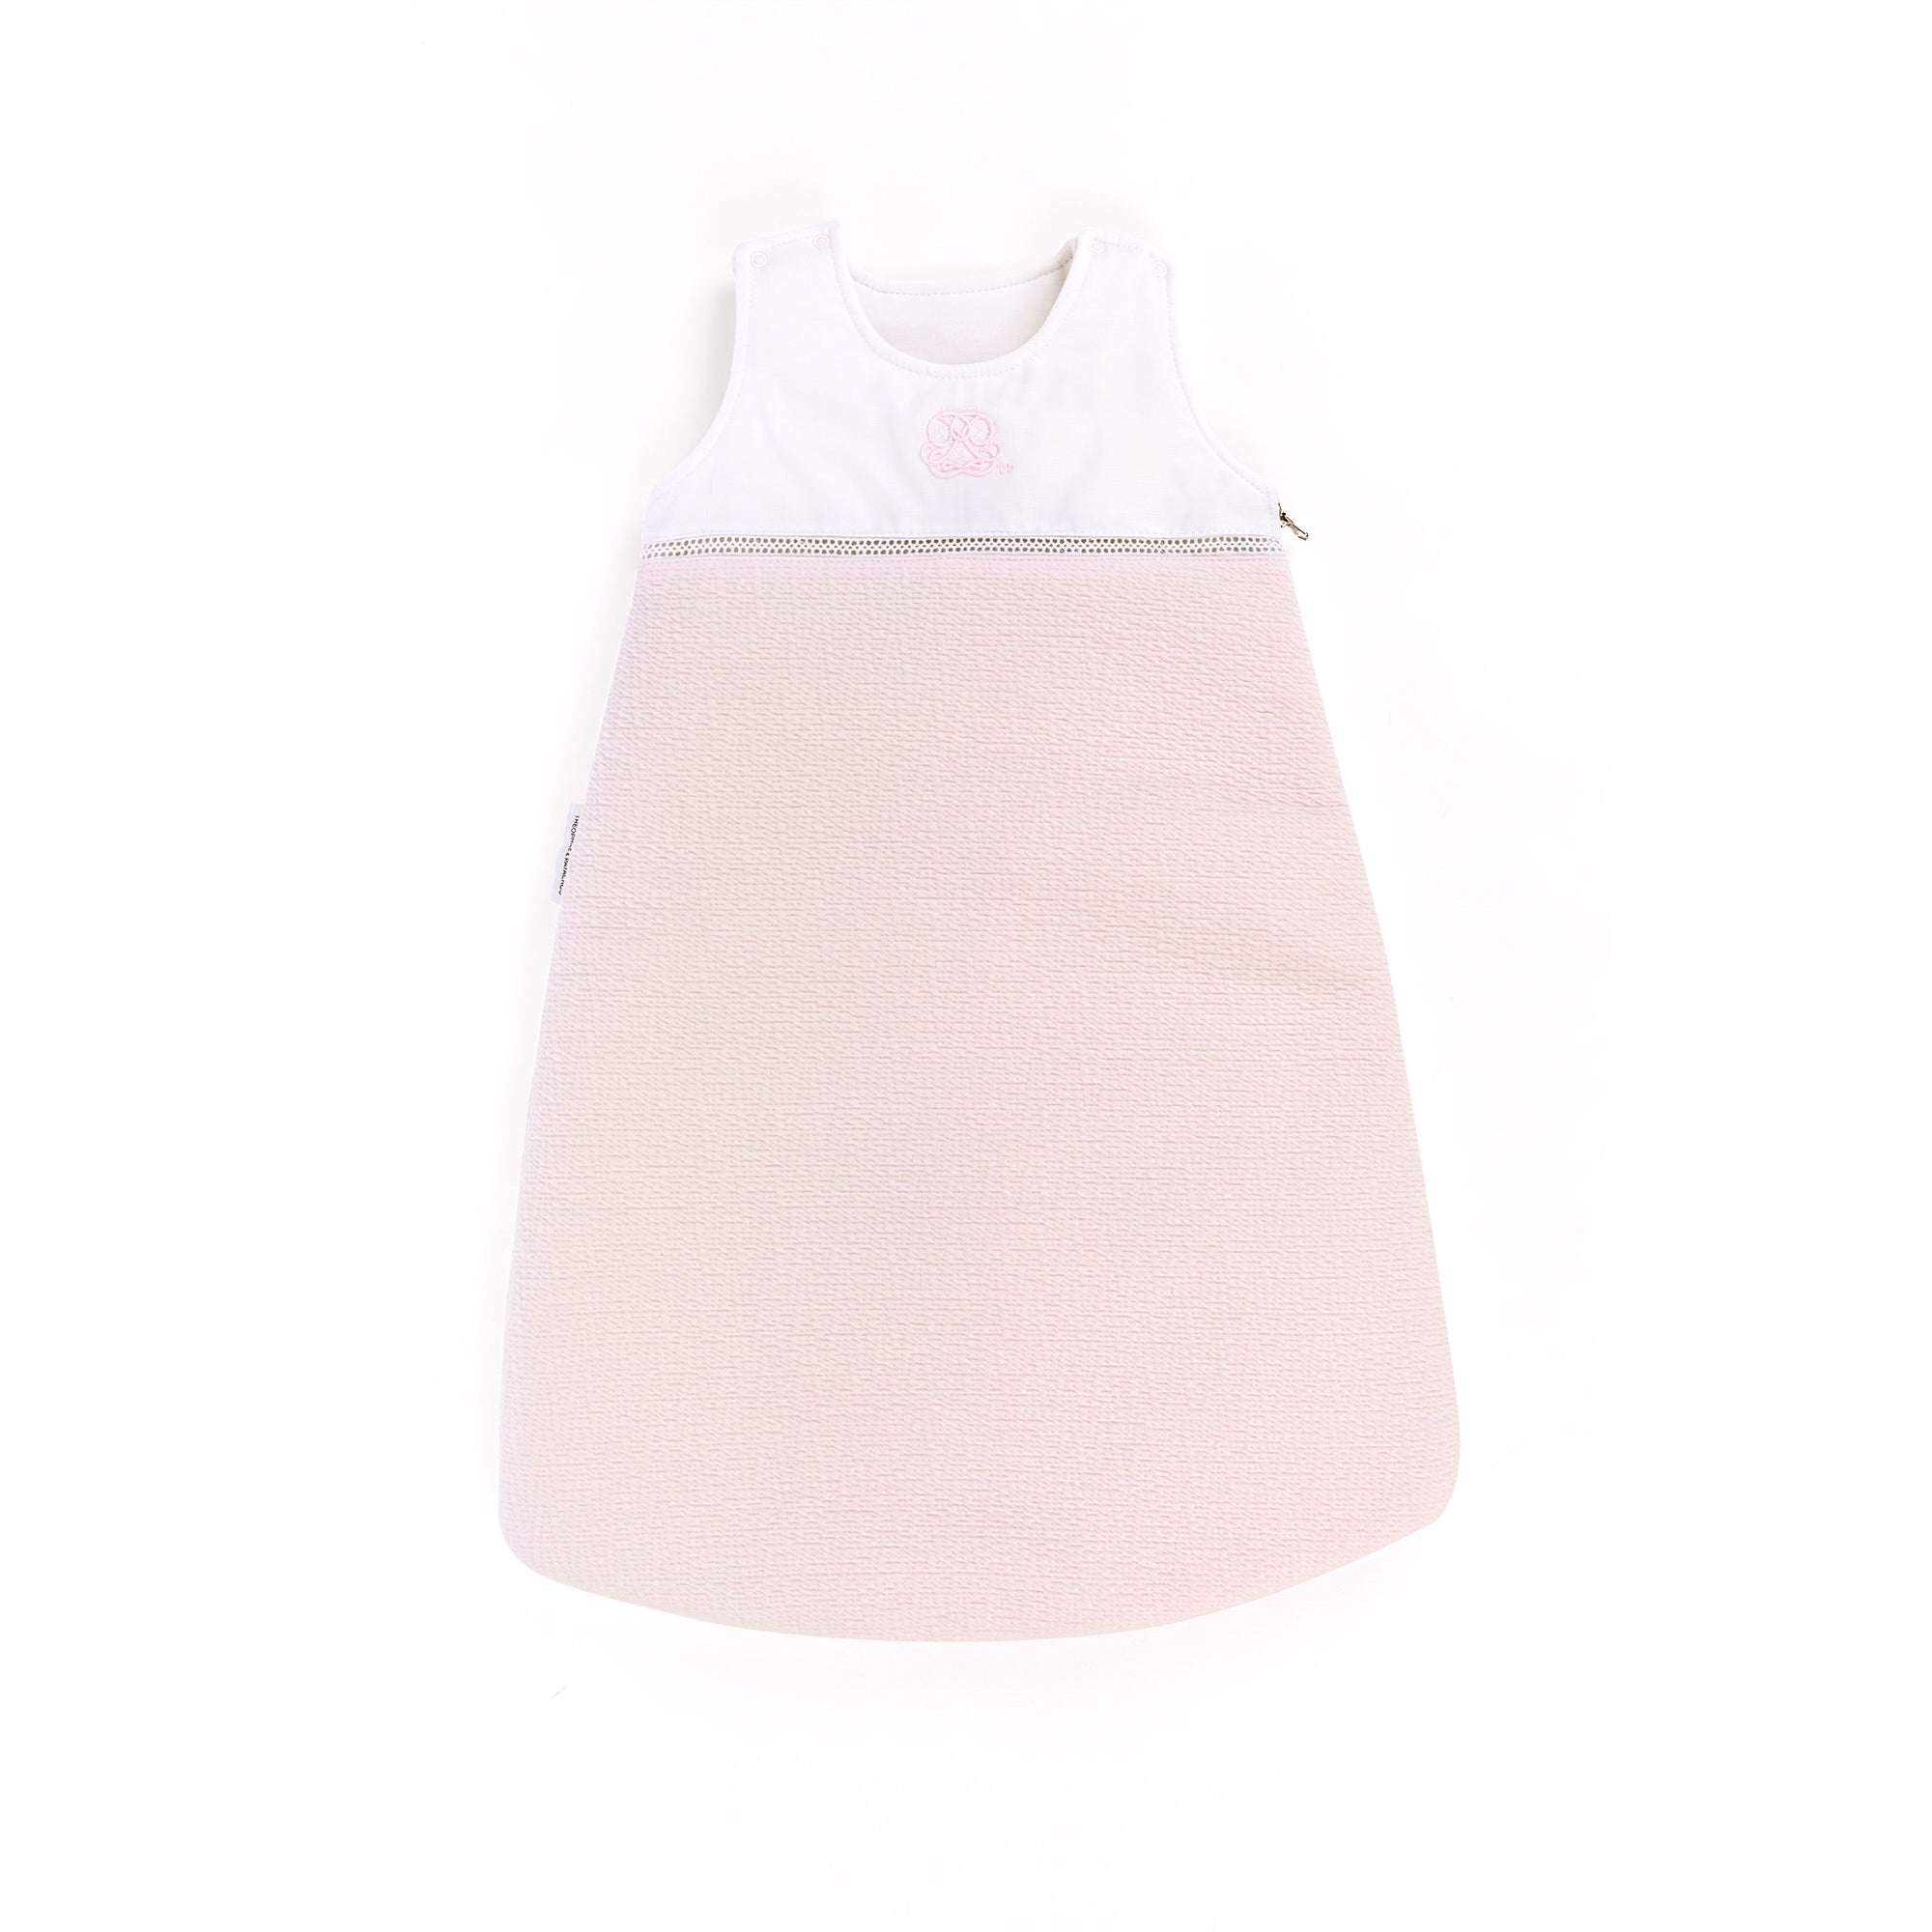 Theophile & Patachou Baby Sleeping Bag 70 cm - Cotton Pink